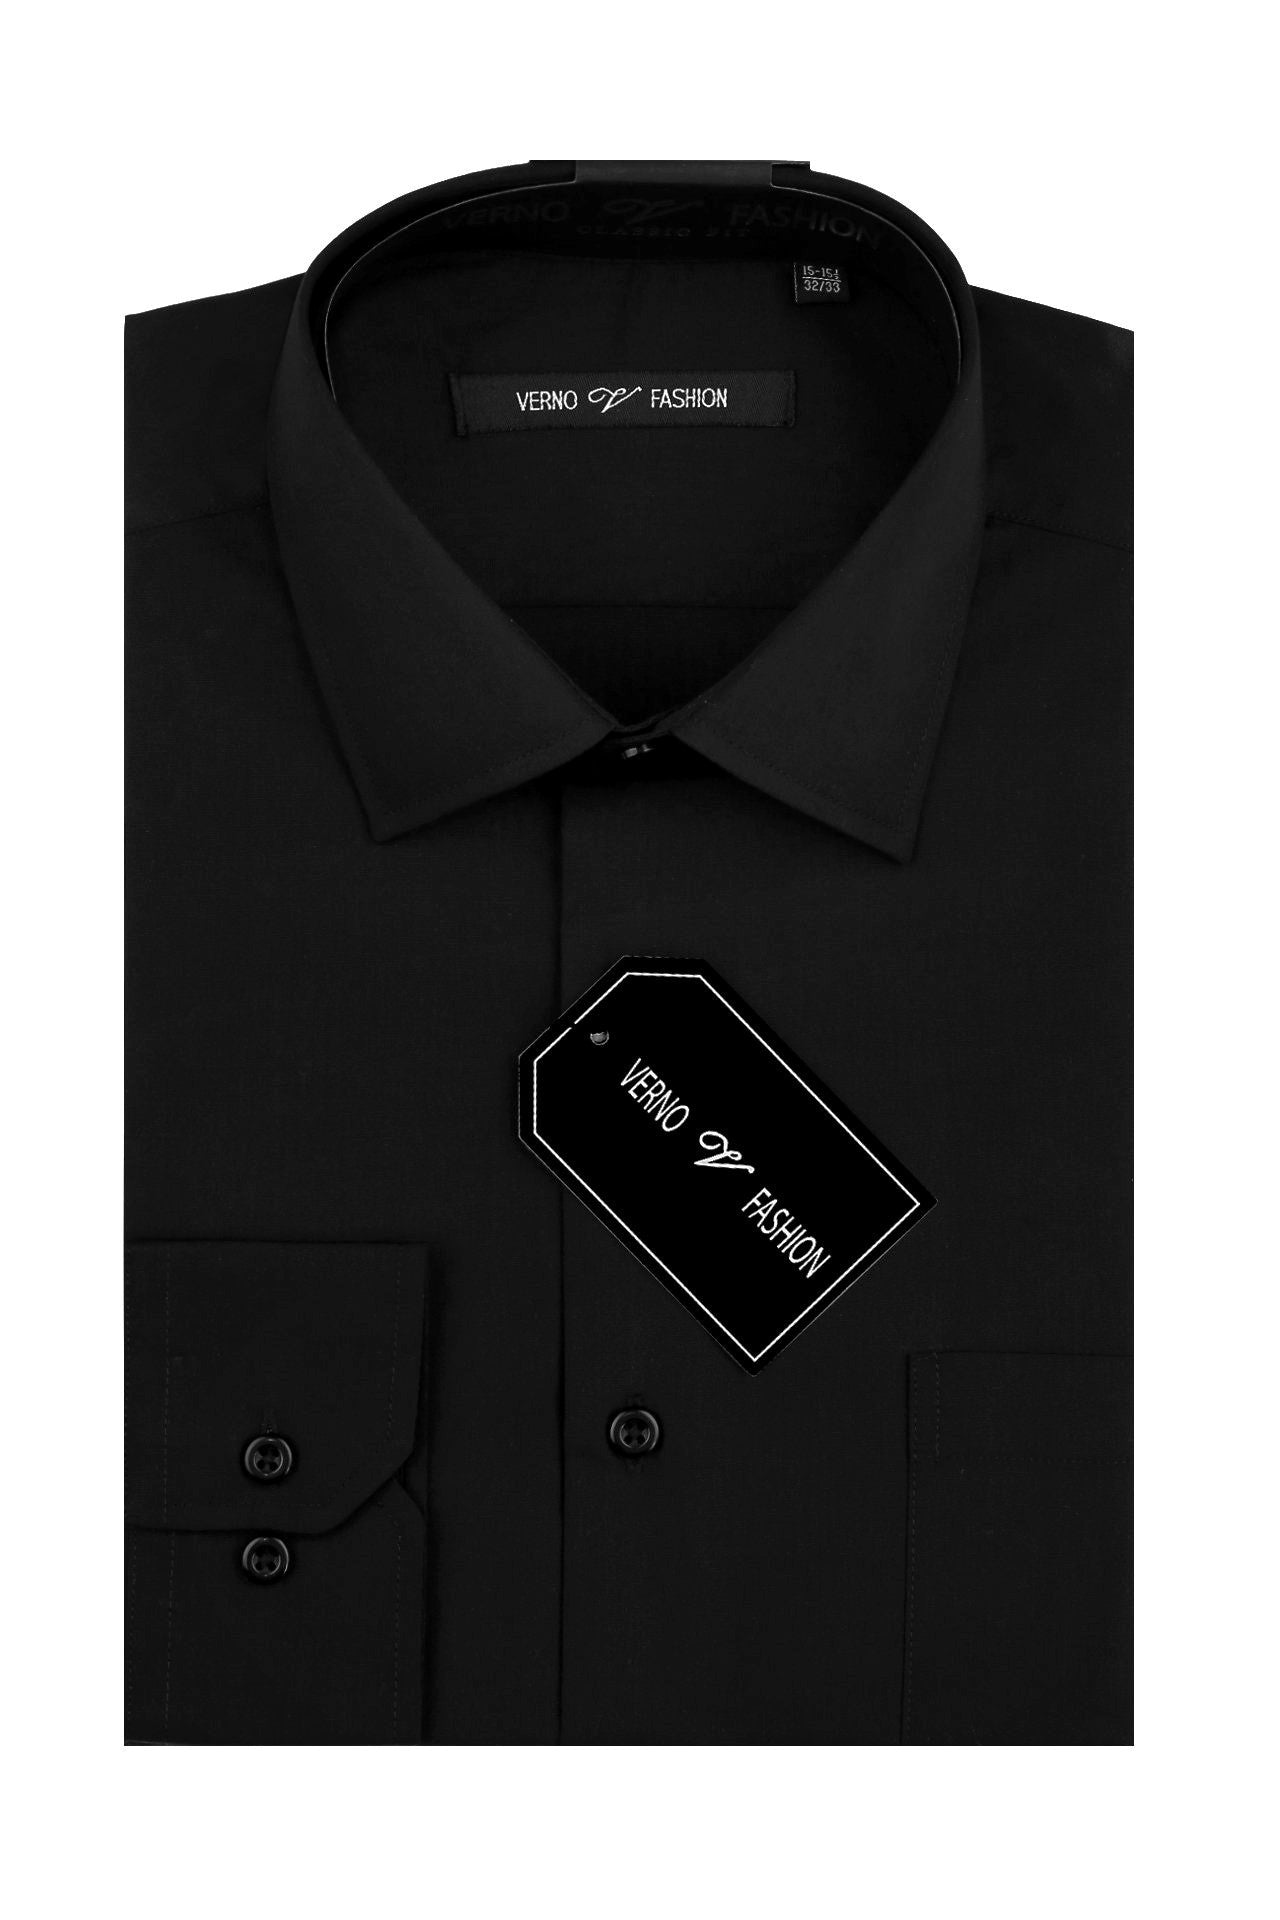 "Black Cotton Blend Dress Shirt - Regular Fit for Men"